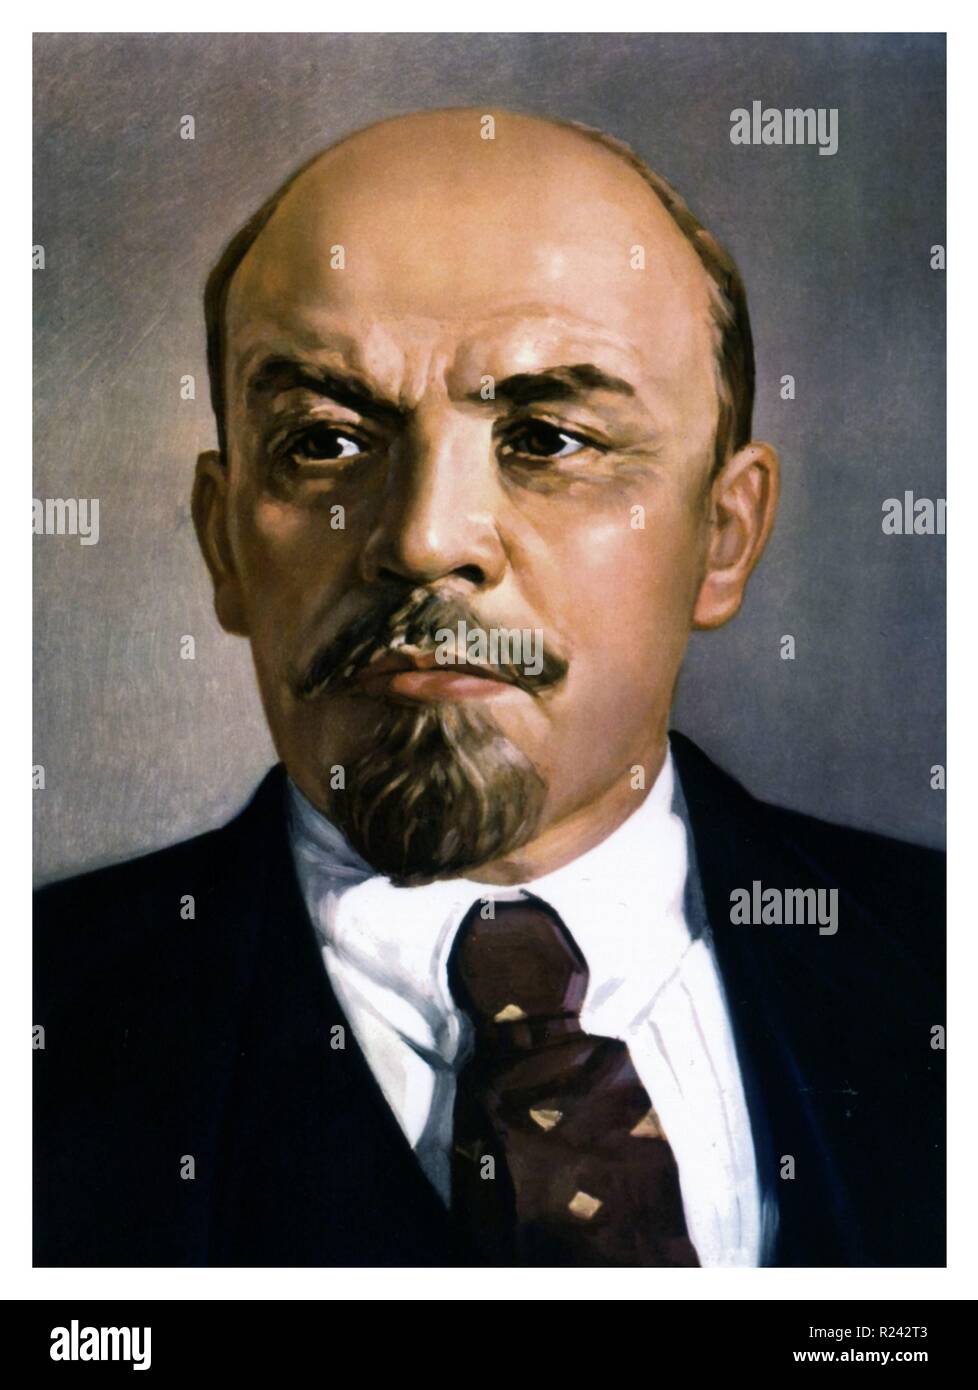 Vladimir Ilyich Ulyanov alias Lenin (22 April 1870 - 21 January 1924) was a Russian communist revolutionary, politician and political theorist Stock Photo